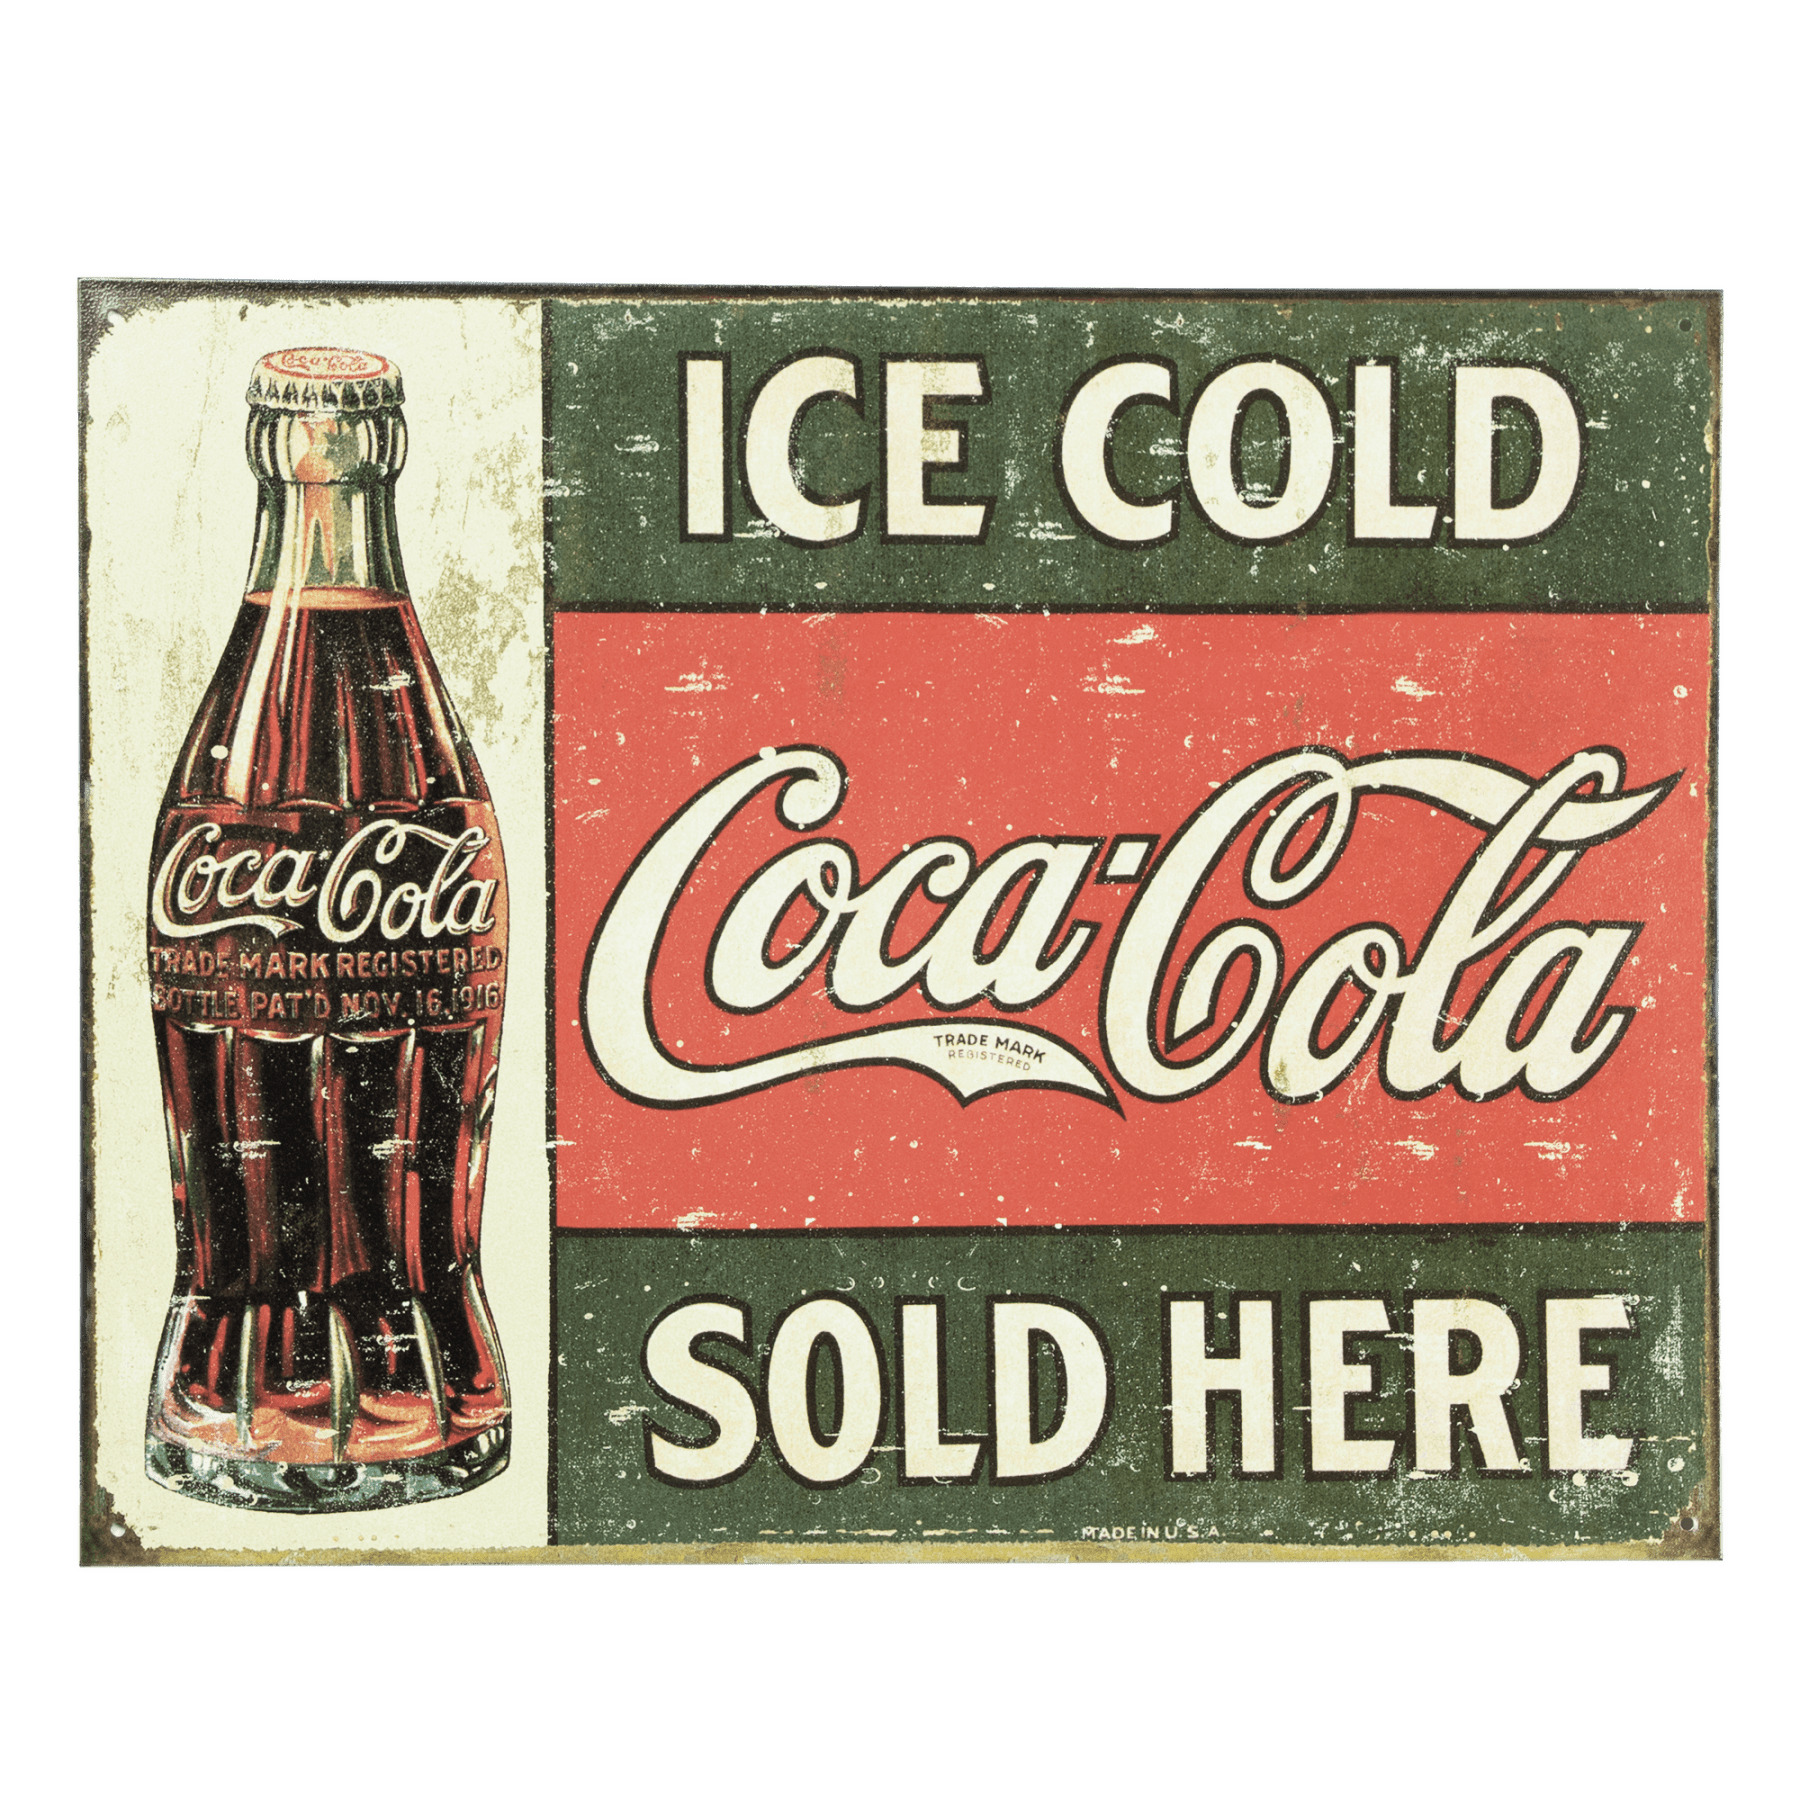 Coca Cola Sold Here Vintage Metal Sign png